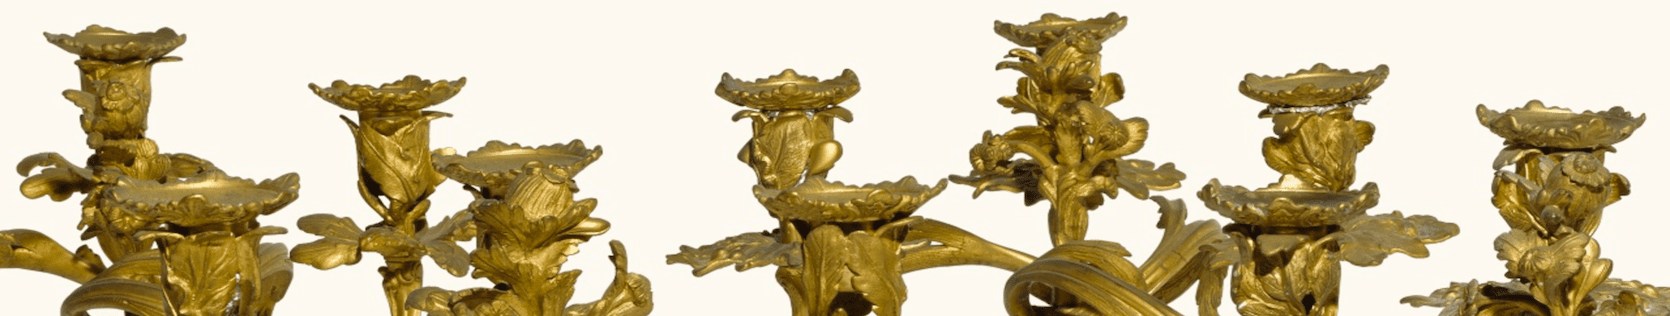 antique bronze candlesticks